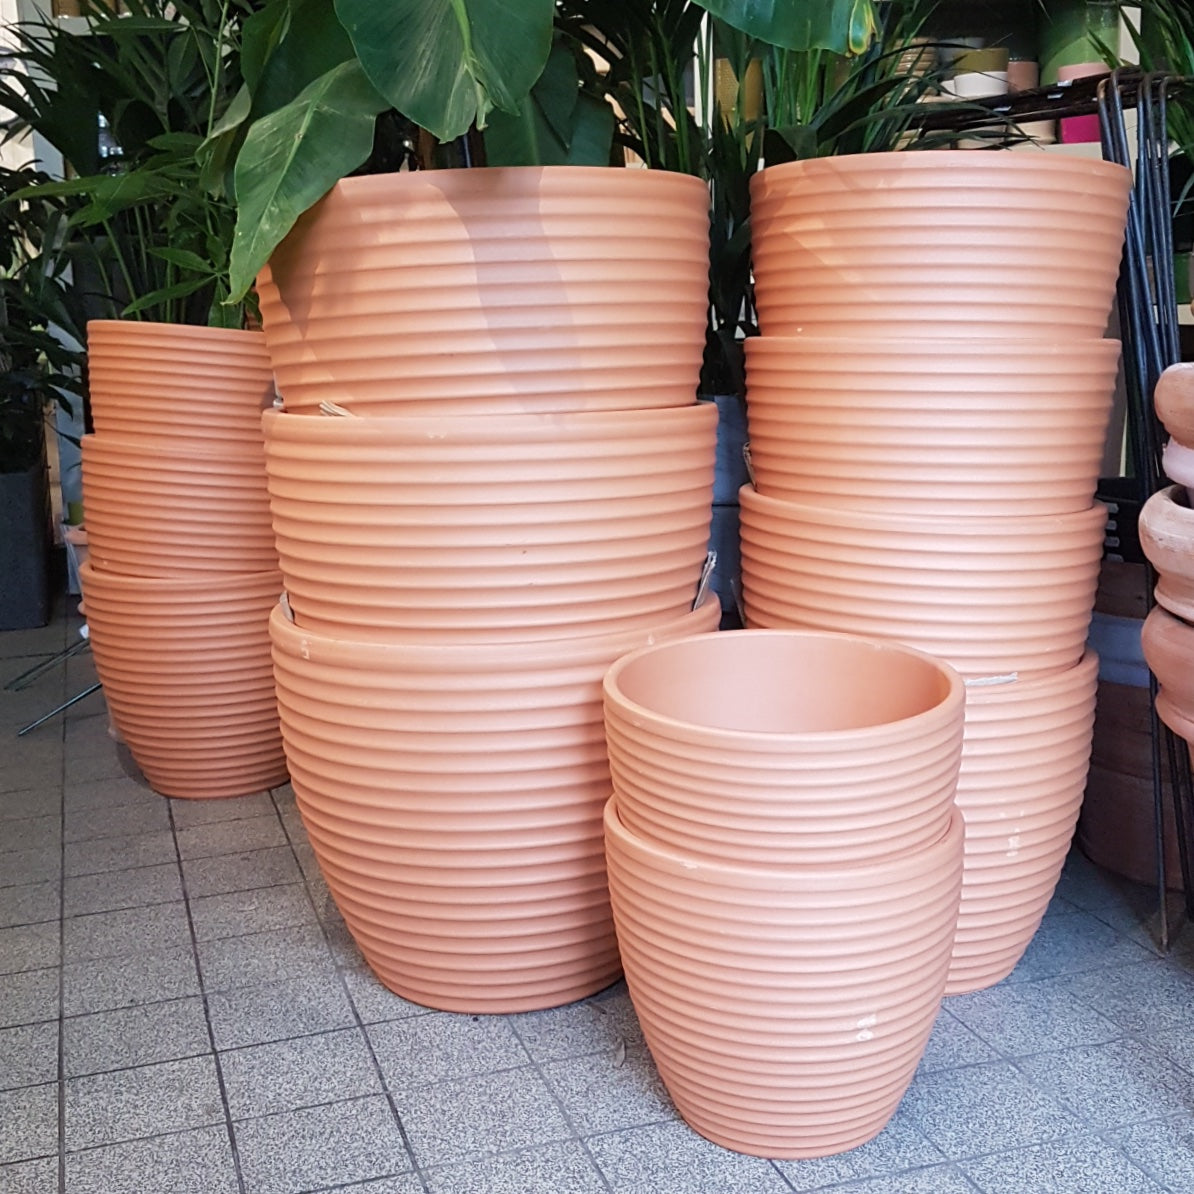 Terracotta 'Ondulado' pot, 3 sizes